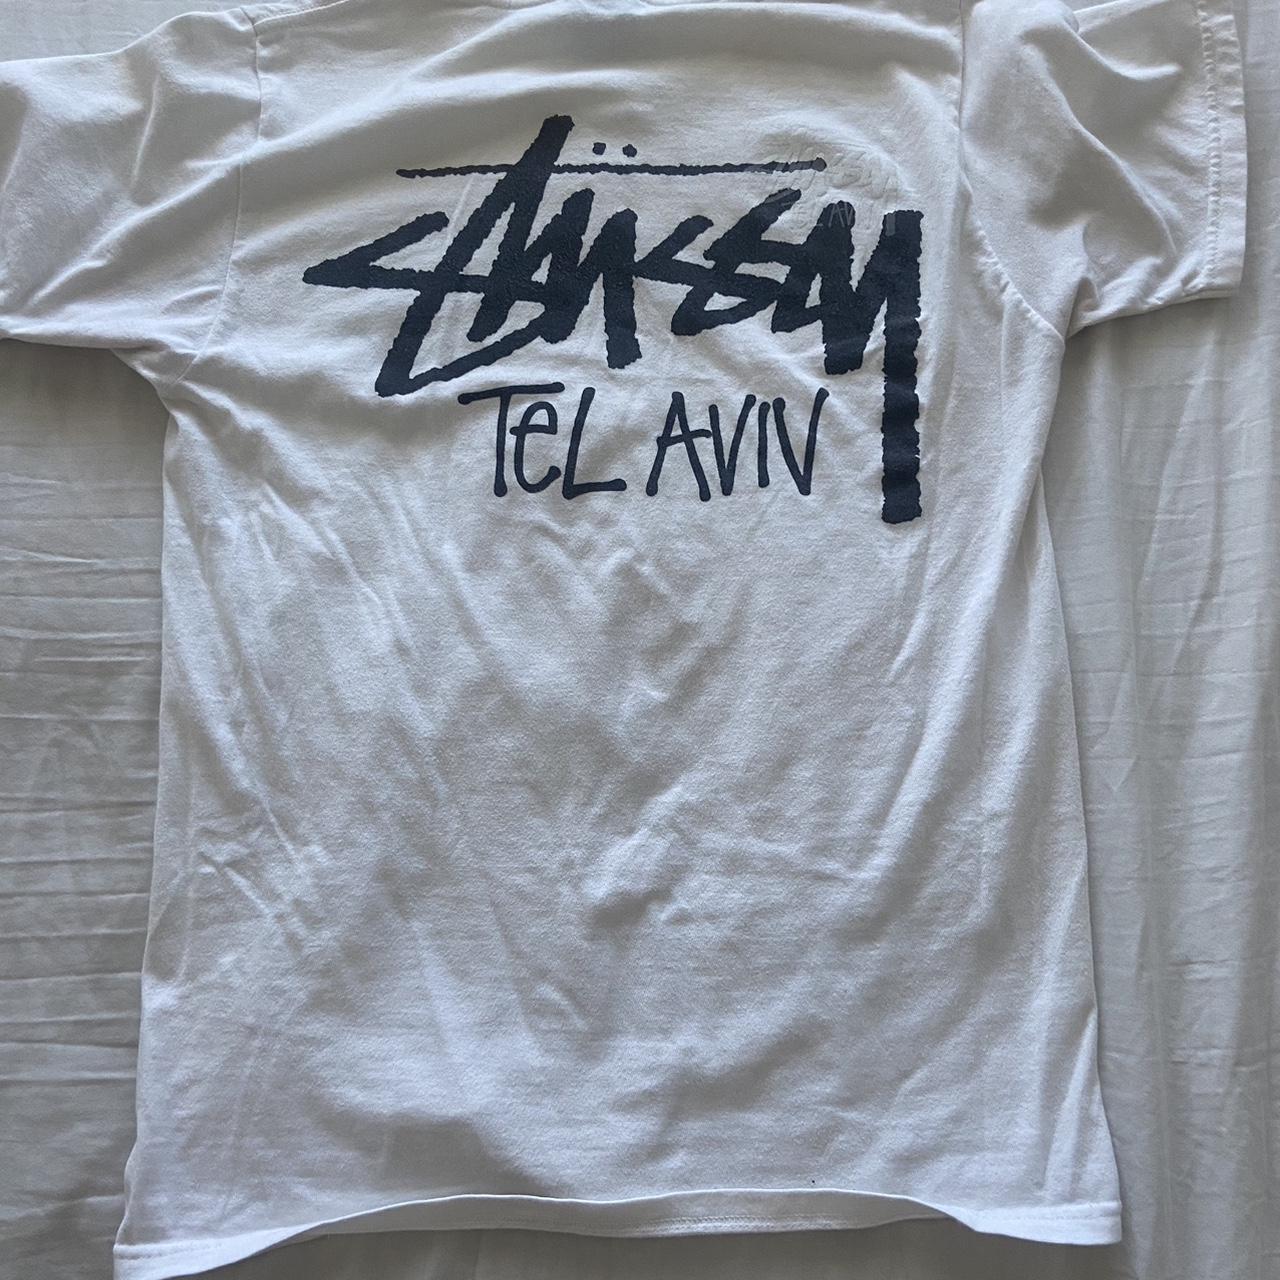 Stussy Tel Aviv Tour Shirt Small Stain Shown in last... - Depop